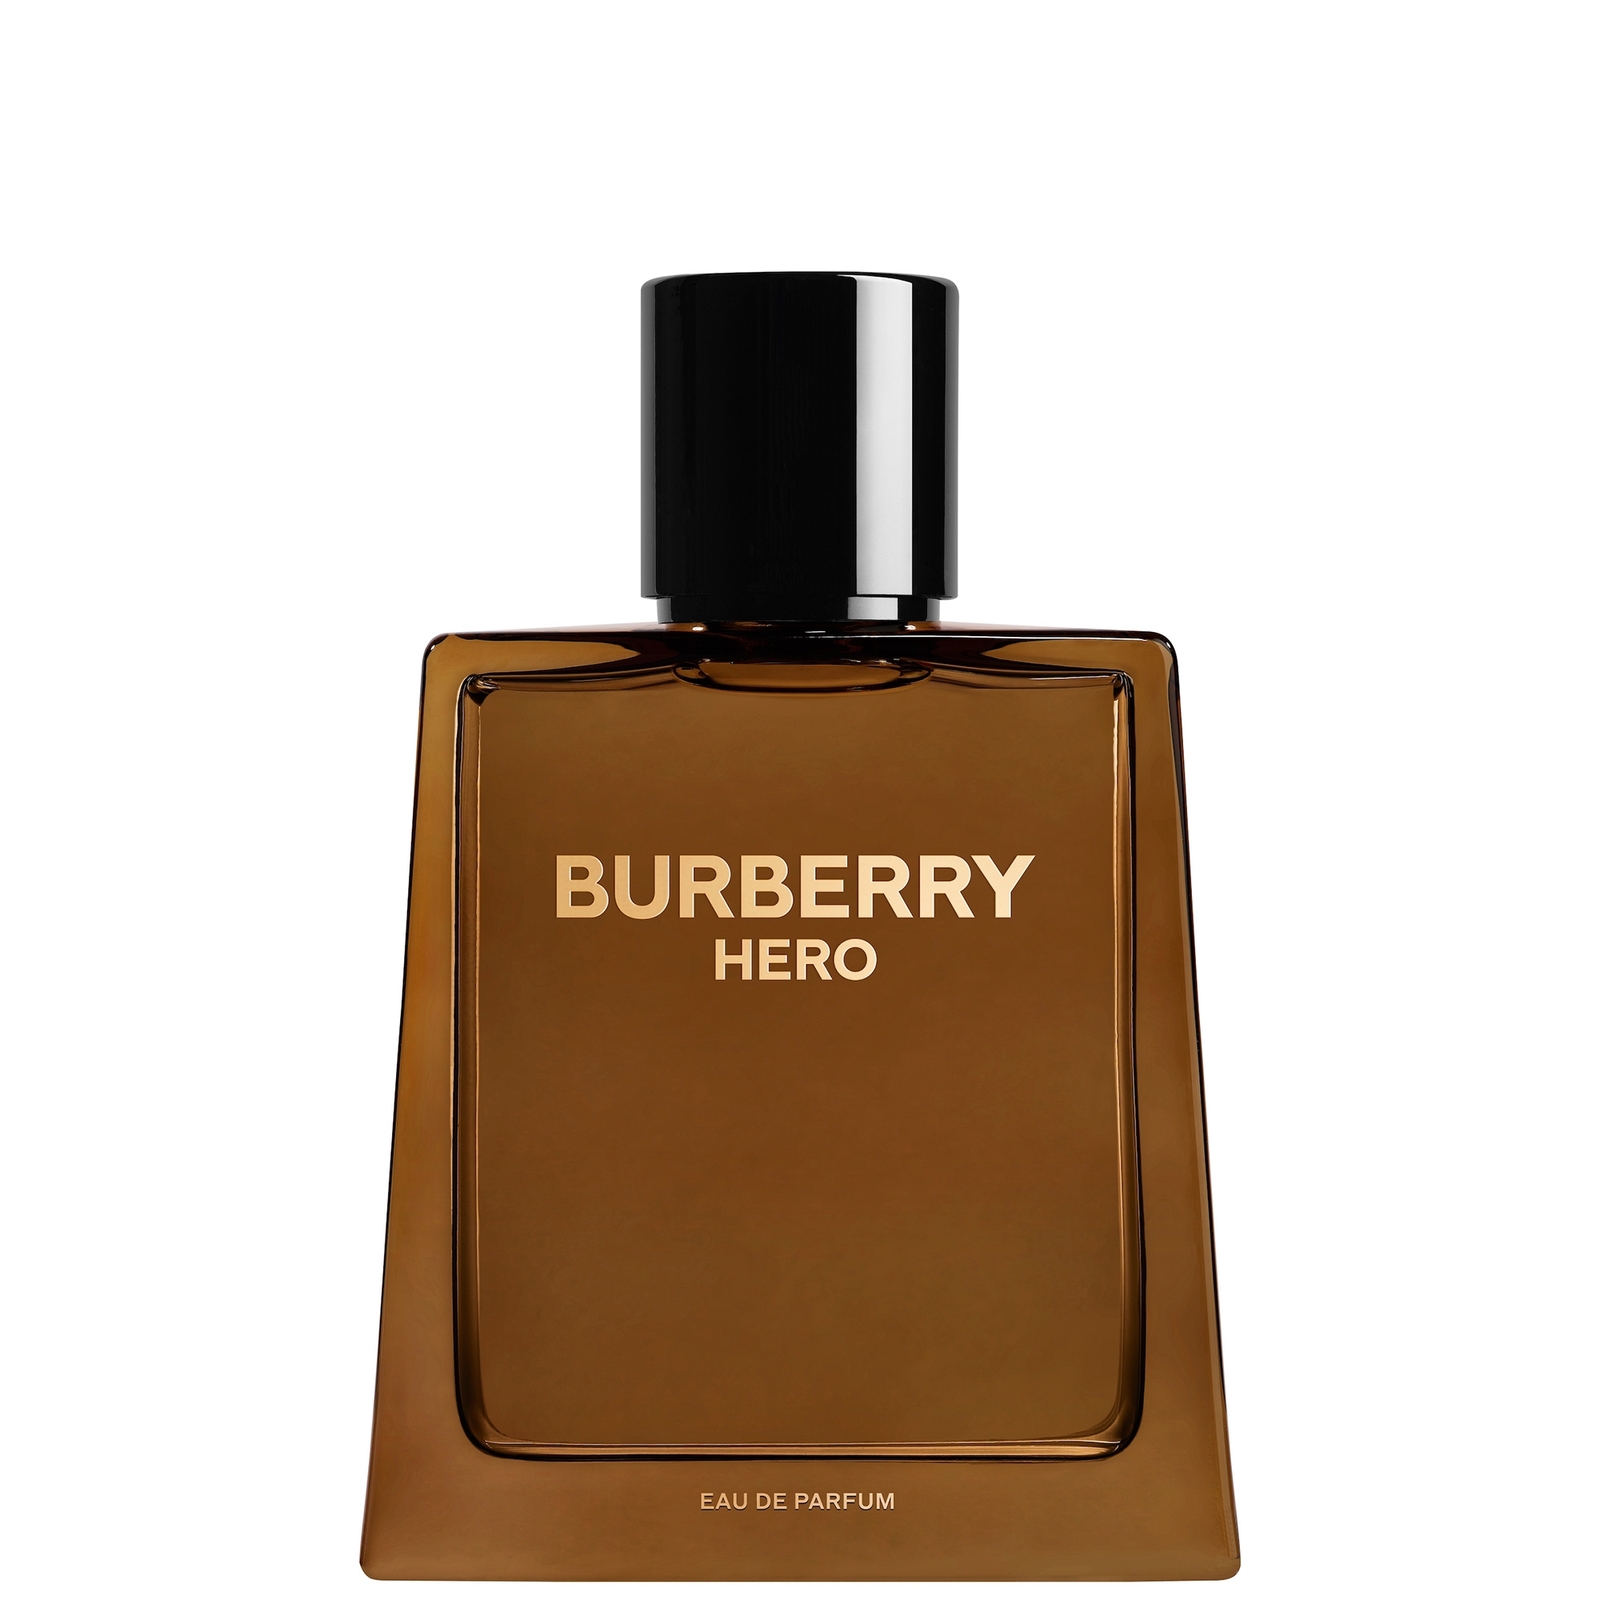 Photos - Women's Fragrance Burberry Hero Eau de Parfum for Men 100ml 99350078785 